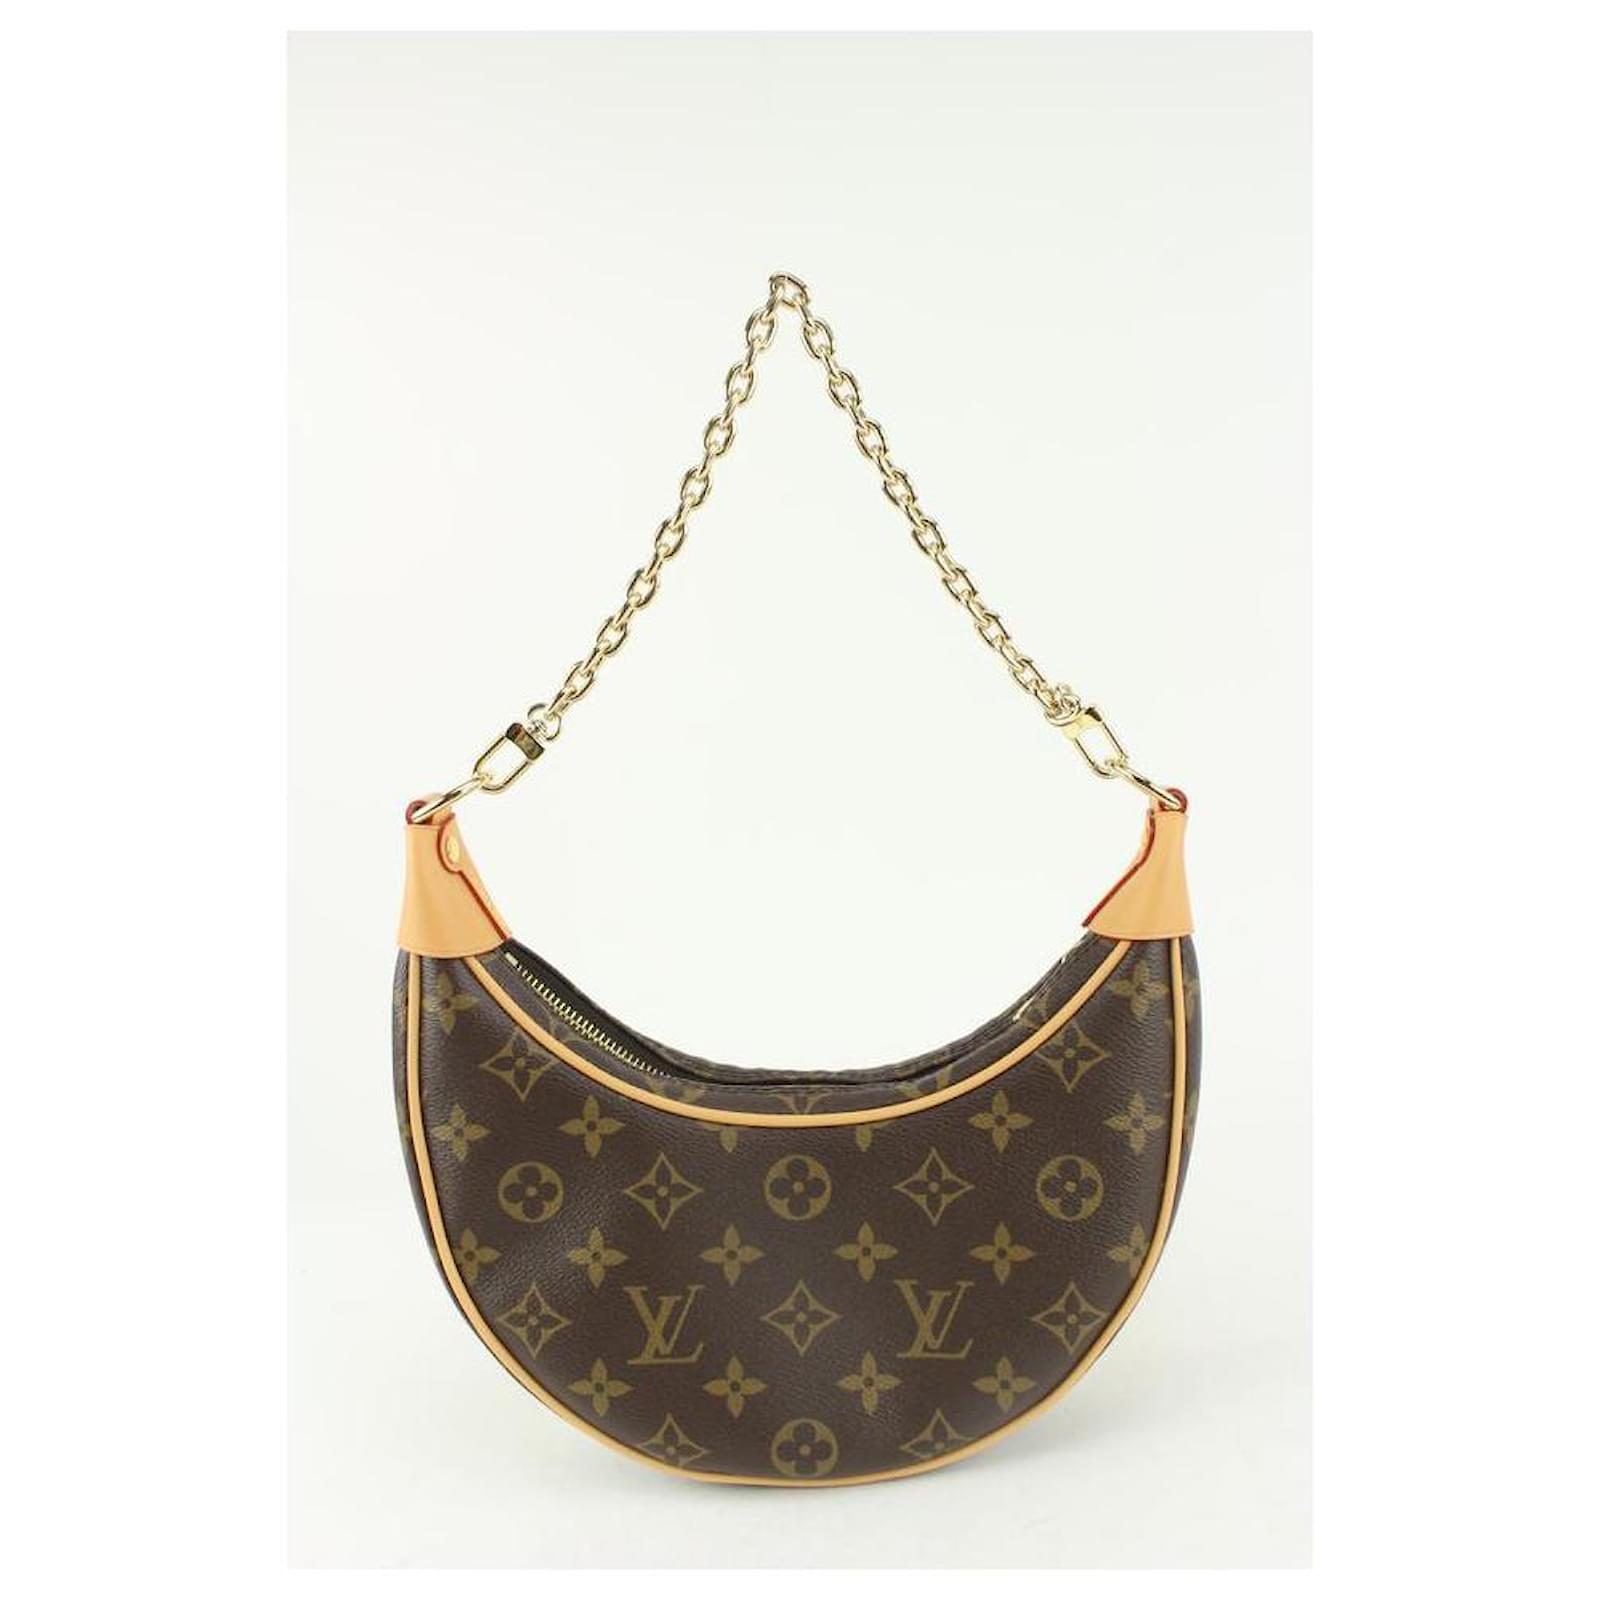 Louis Vuitton Loop Hobo Bag #louisvuitton #luxuryhandbags #shorts